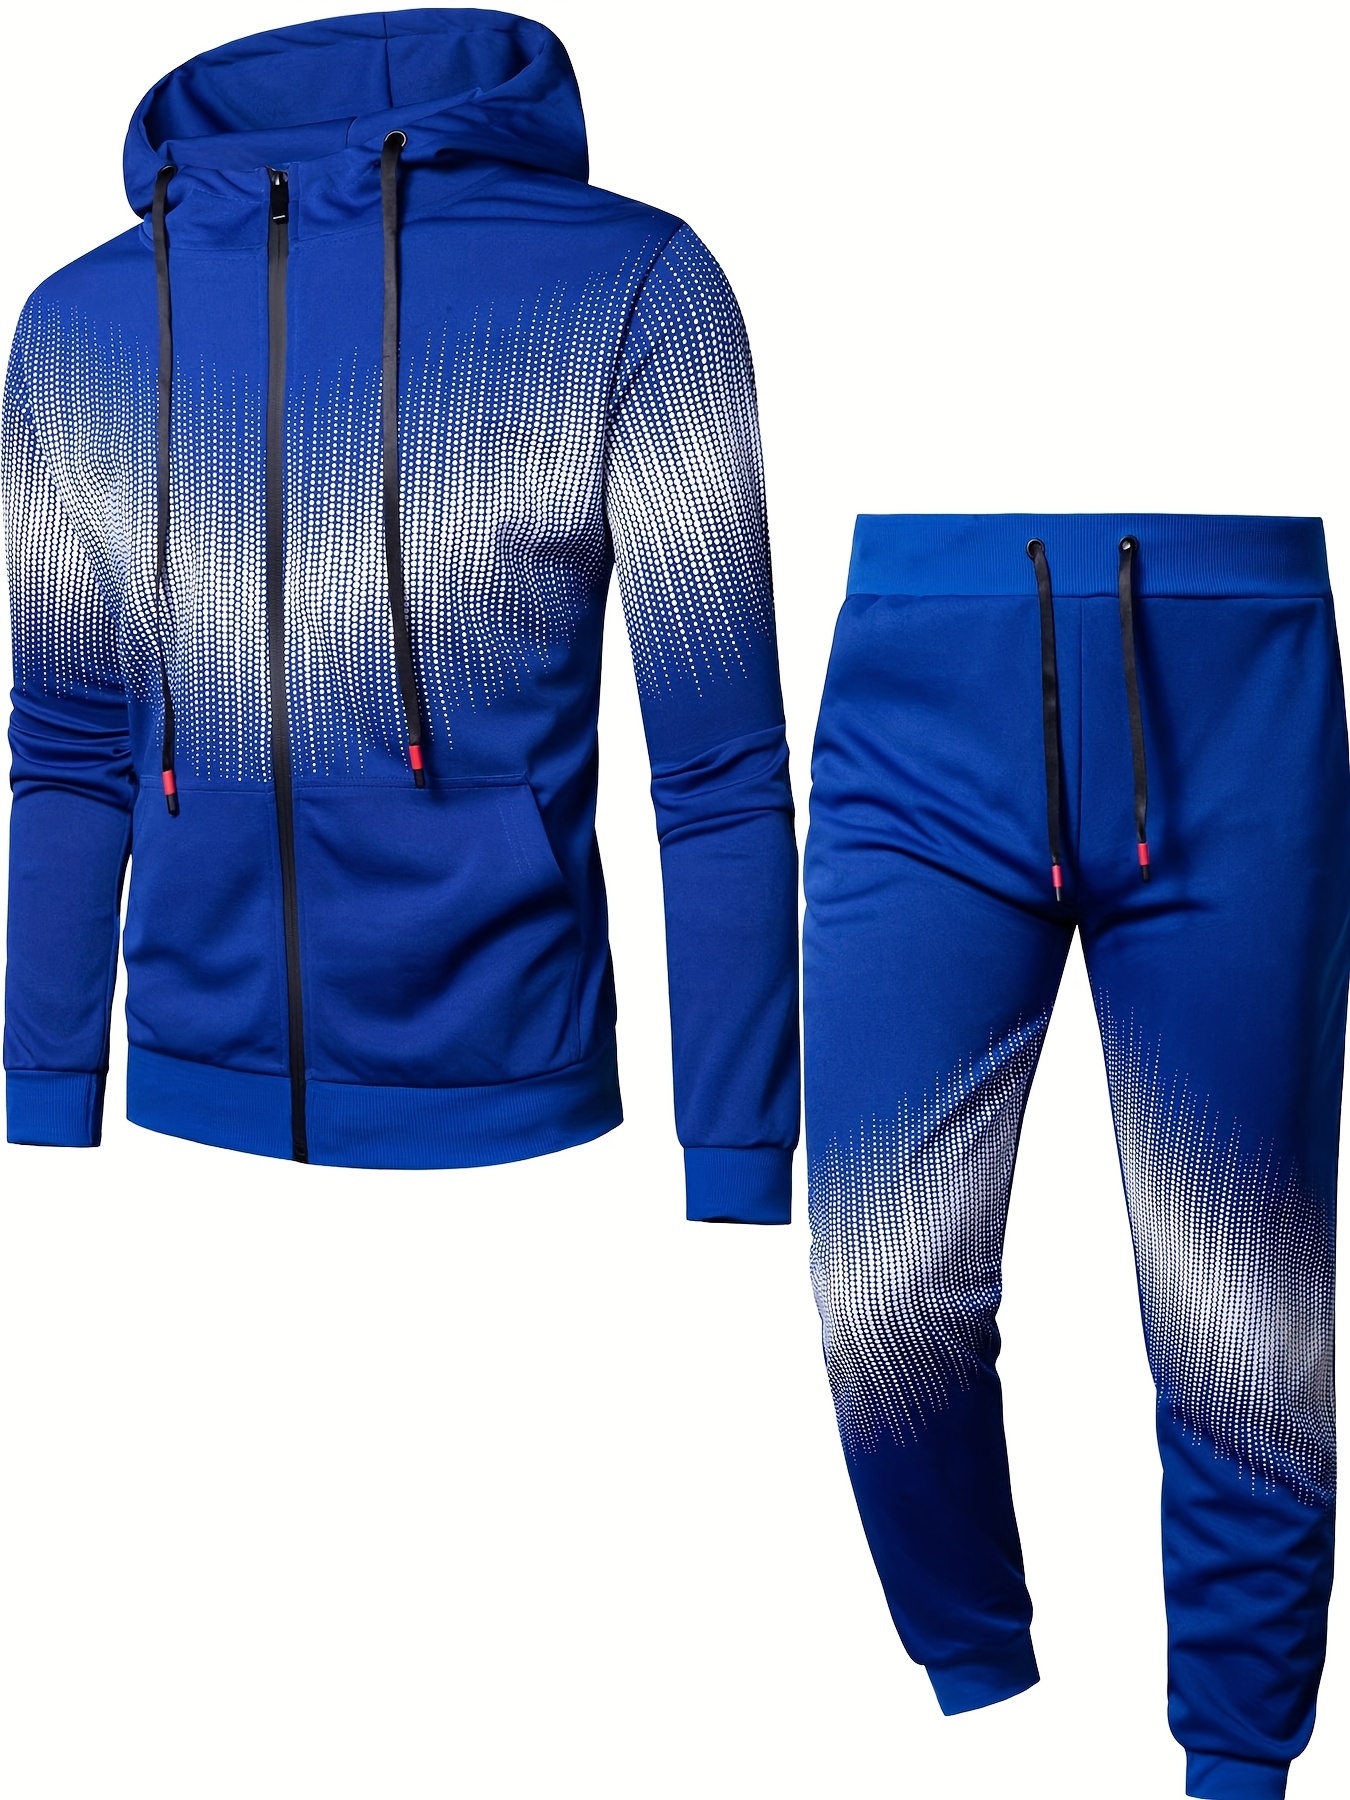 X-2 Men Track Suits 2 Pieces Set Full Zip Sweatsuit Men Hooded Tracksuit  Athletic Sports Set Teal Blue X-Large